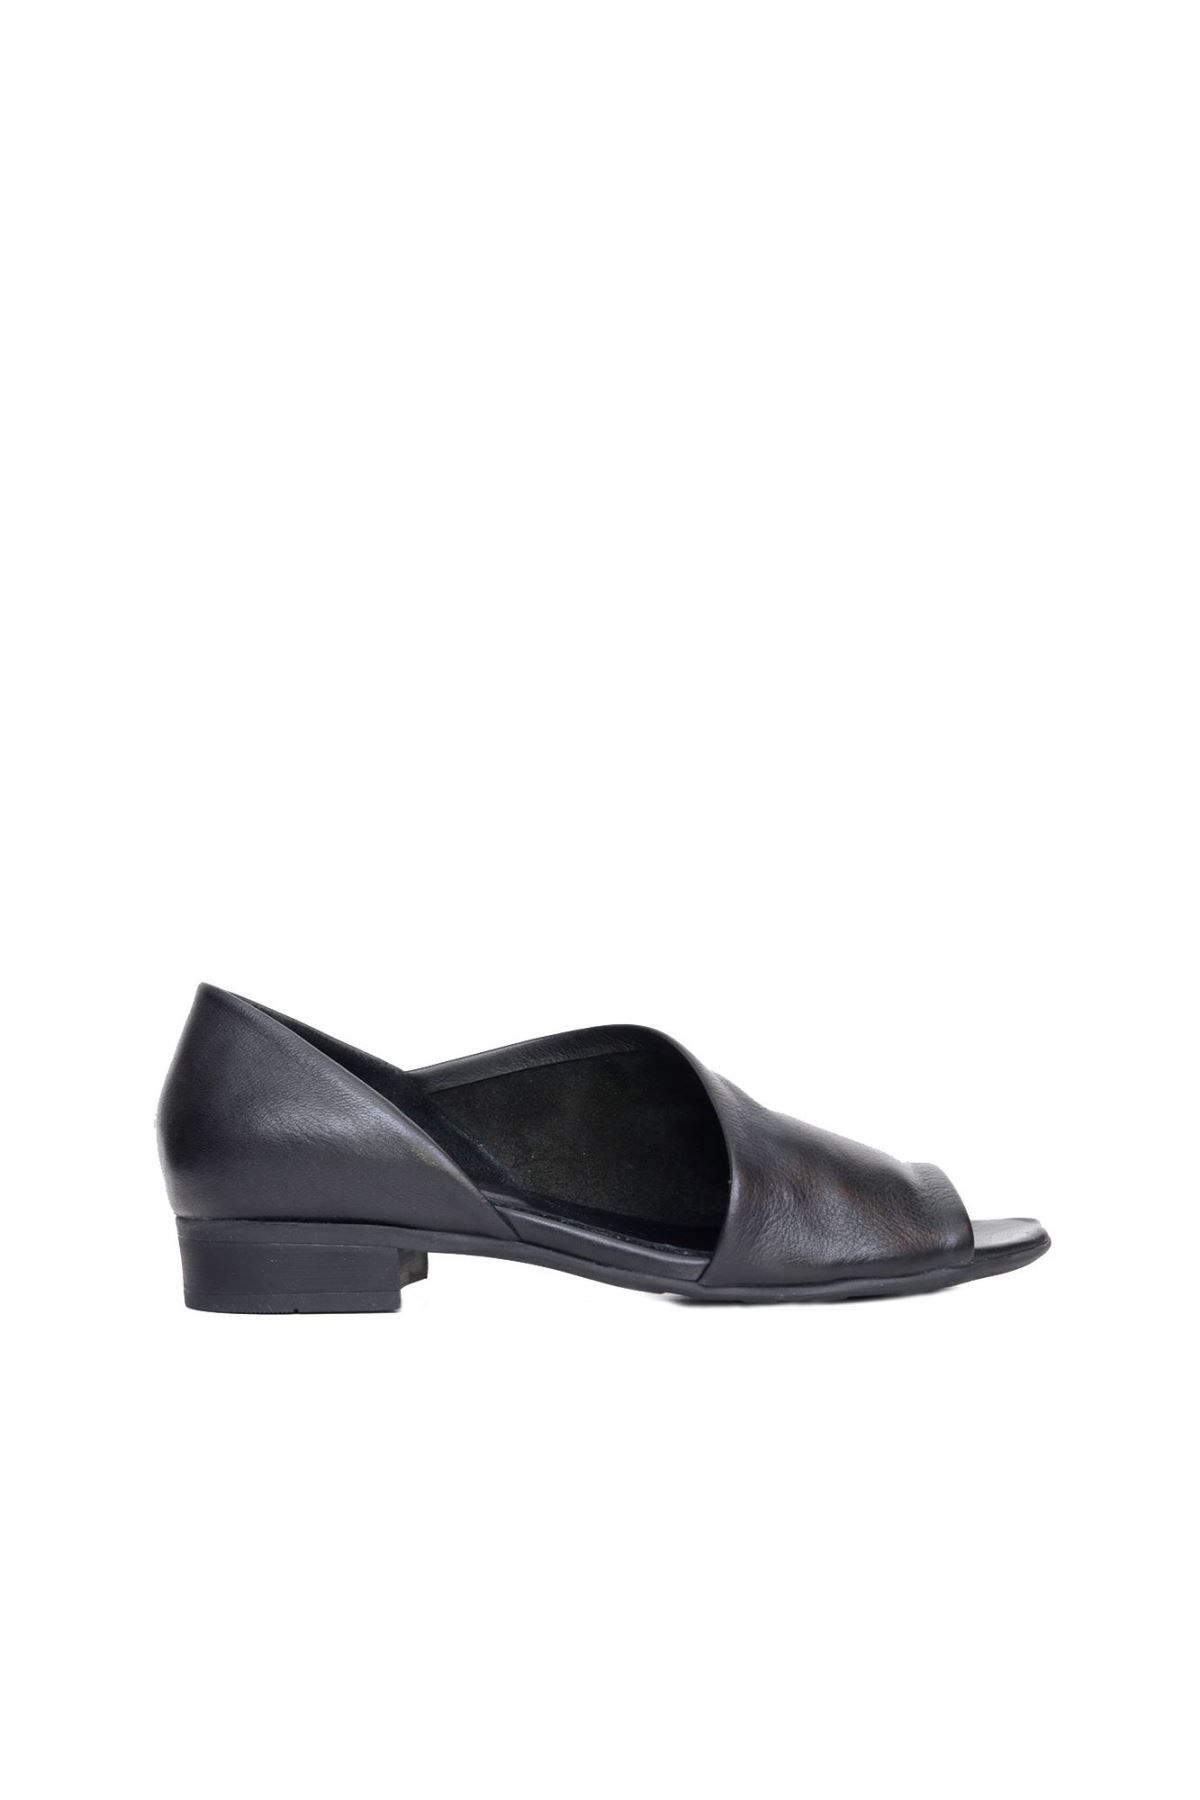 BUENO Shoes Siyah Deri Kadın Sandalet